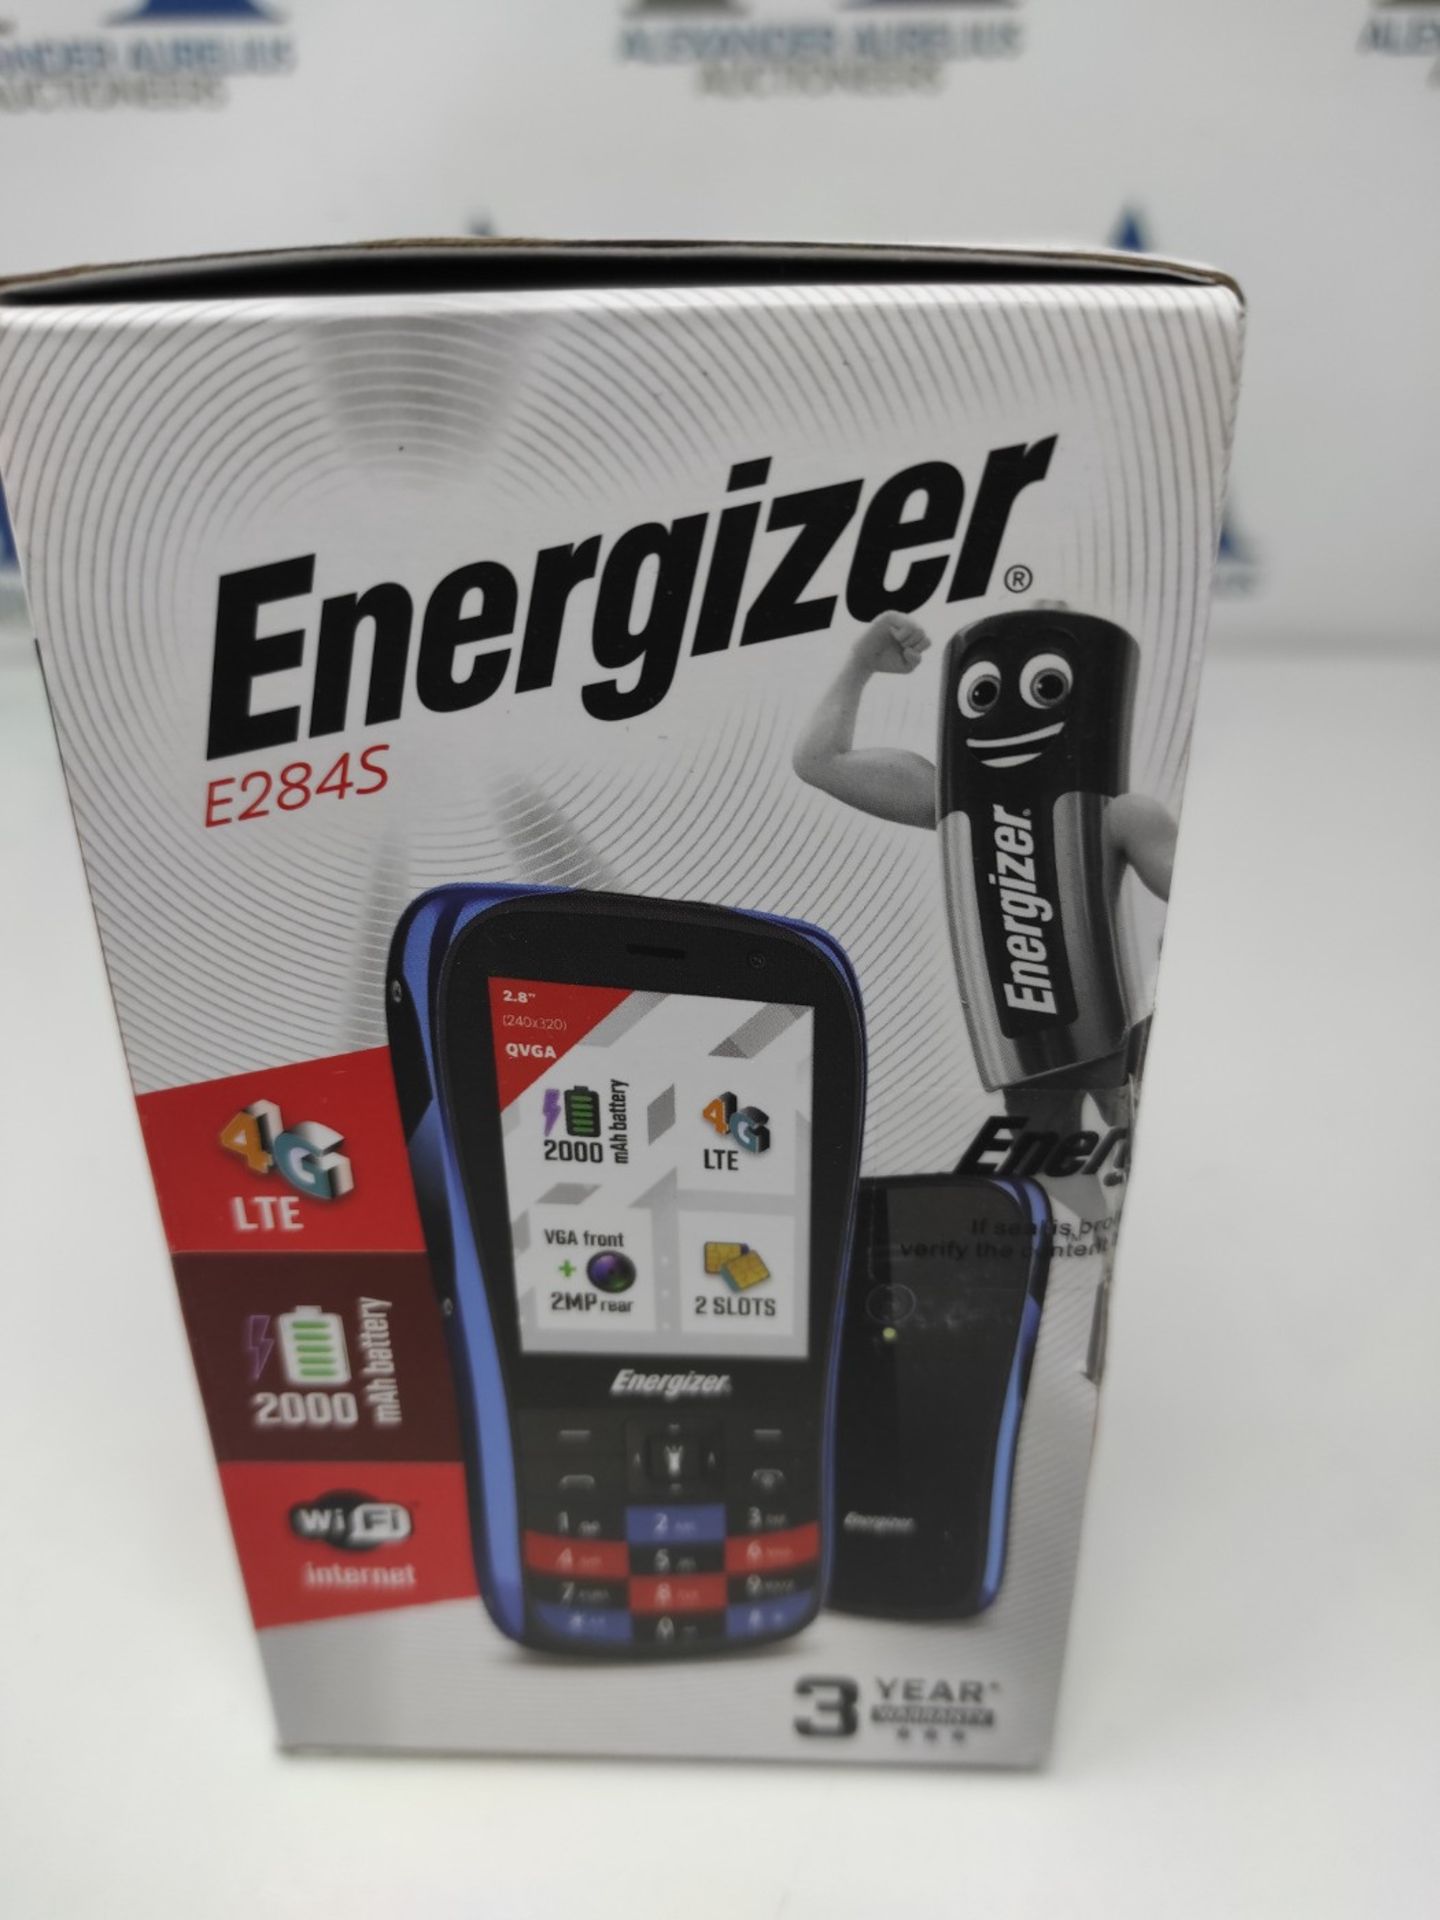 Energizer - Mobile Physical Keyboard E284S - 4G - Dual Sim (Nano SIM) - 3 Year Warrant - Image 2 of 3